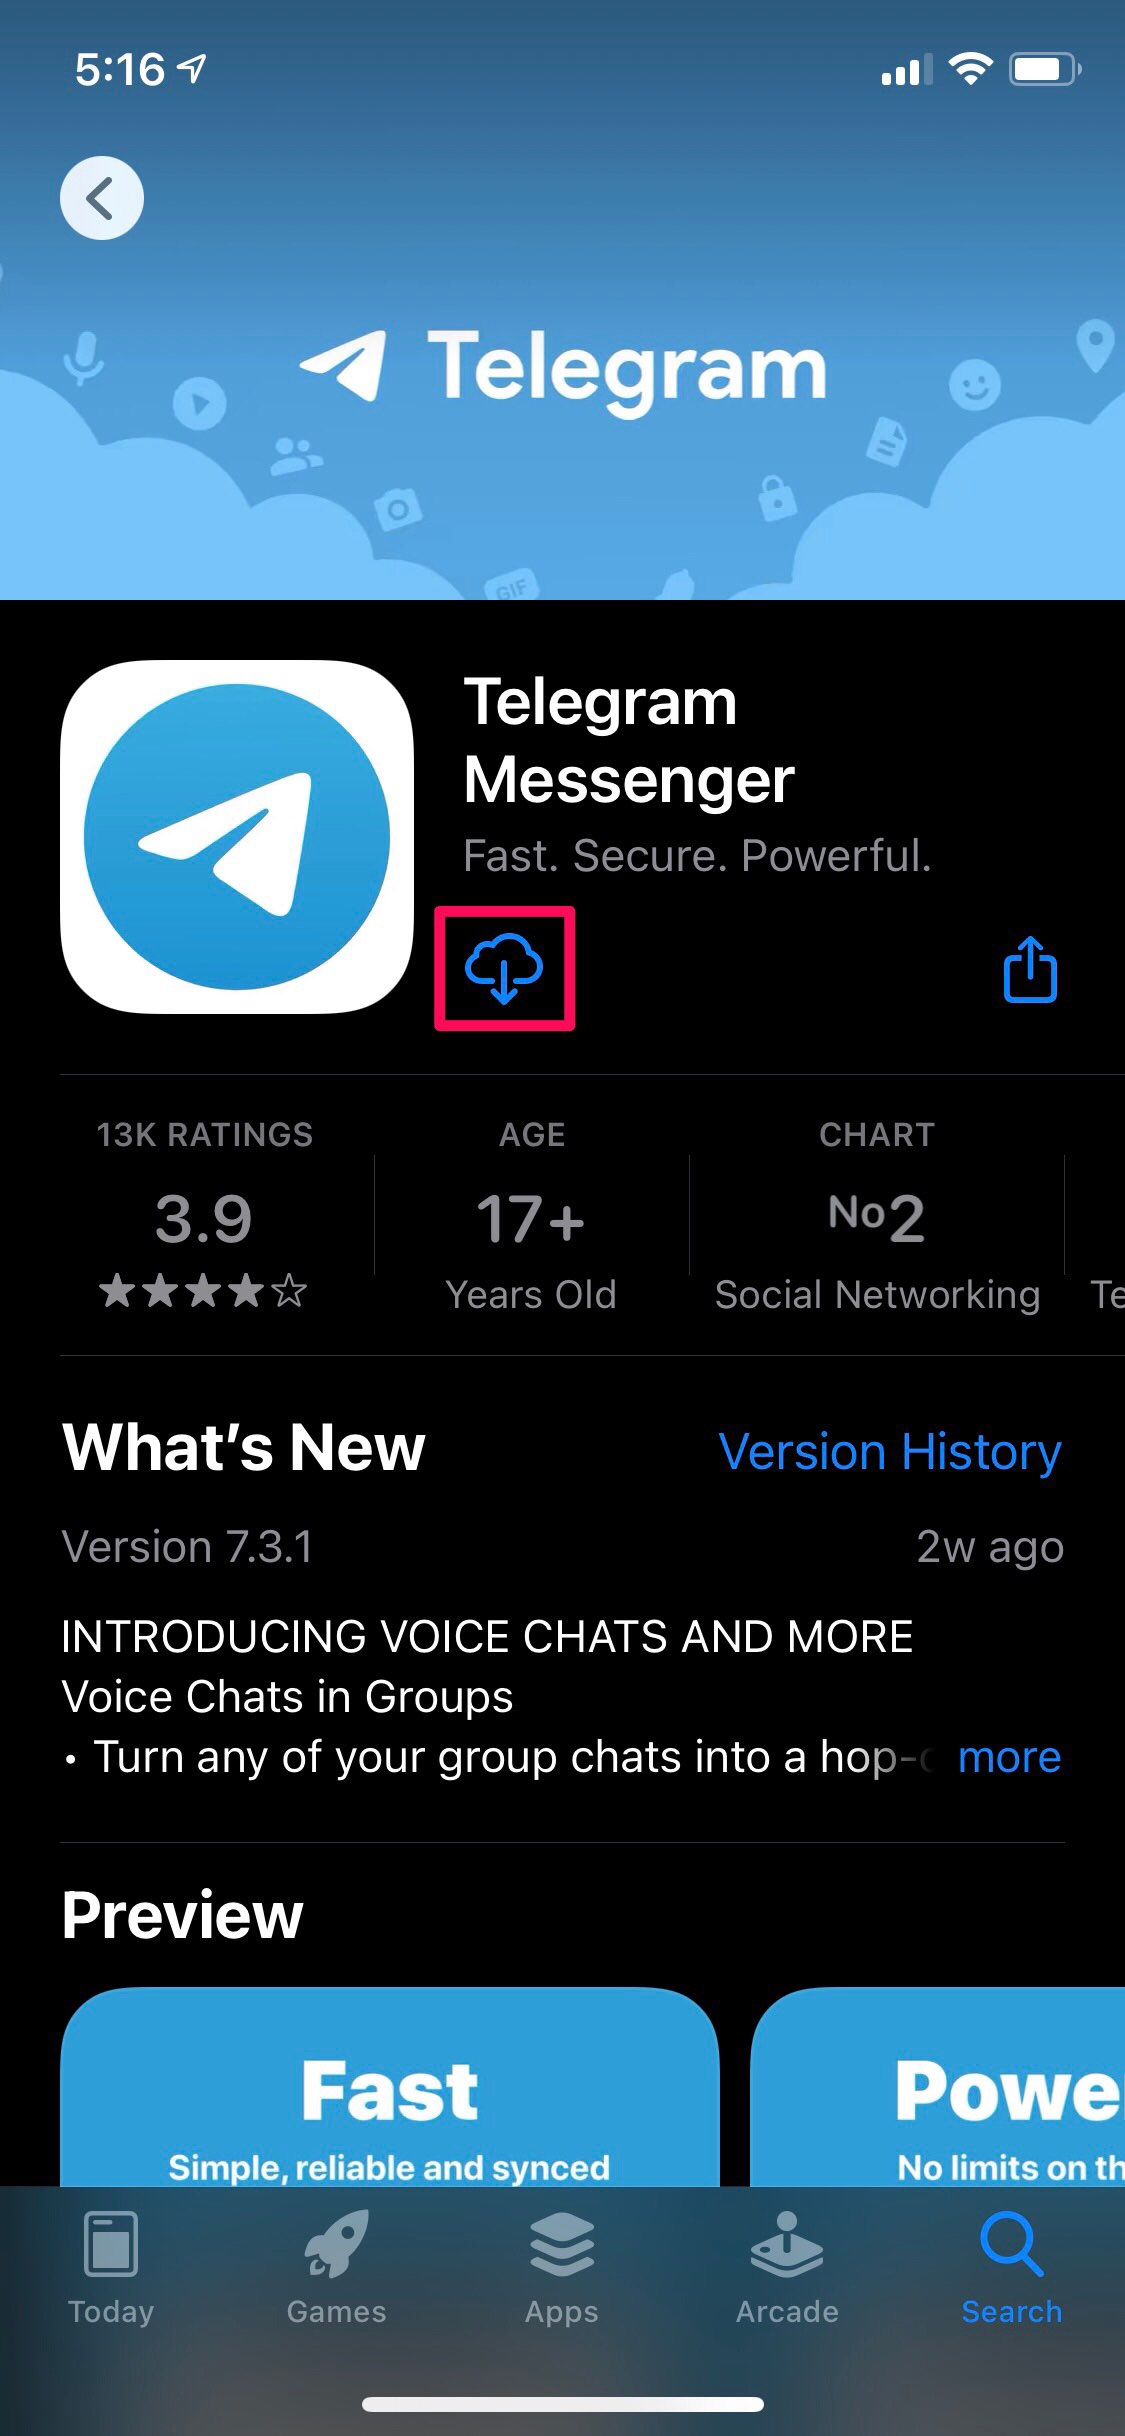 download the last version for ios Telegram 4.11.7